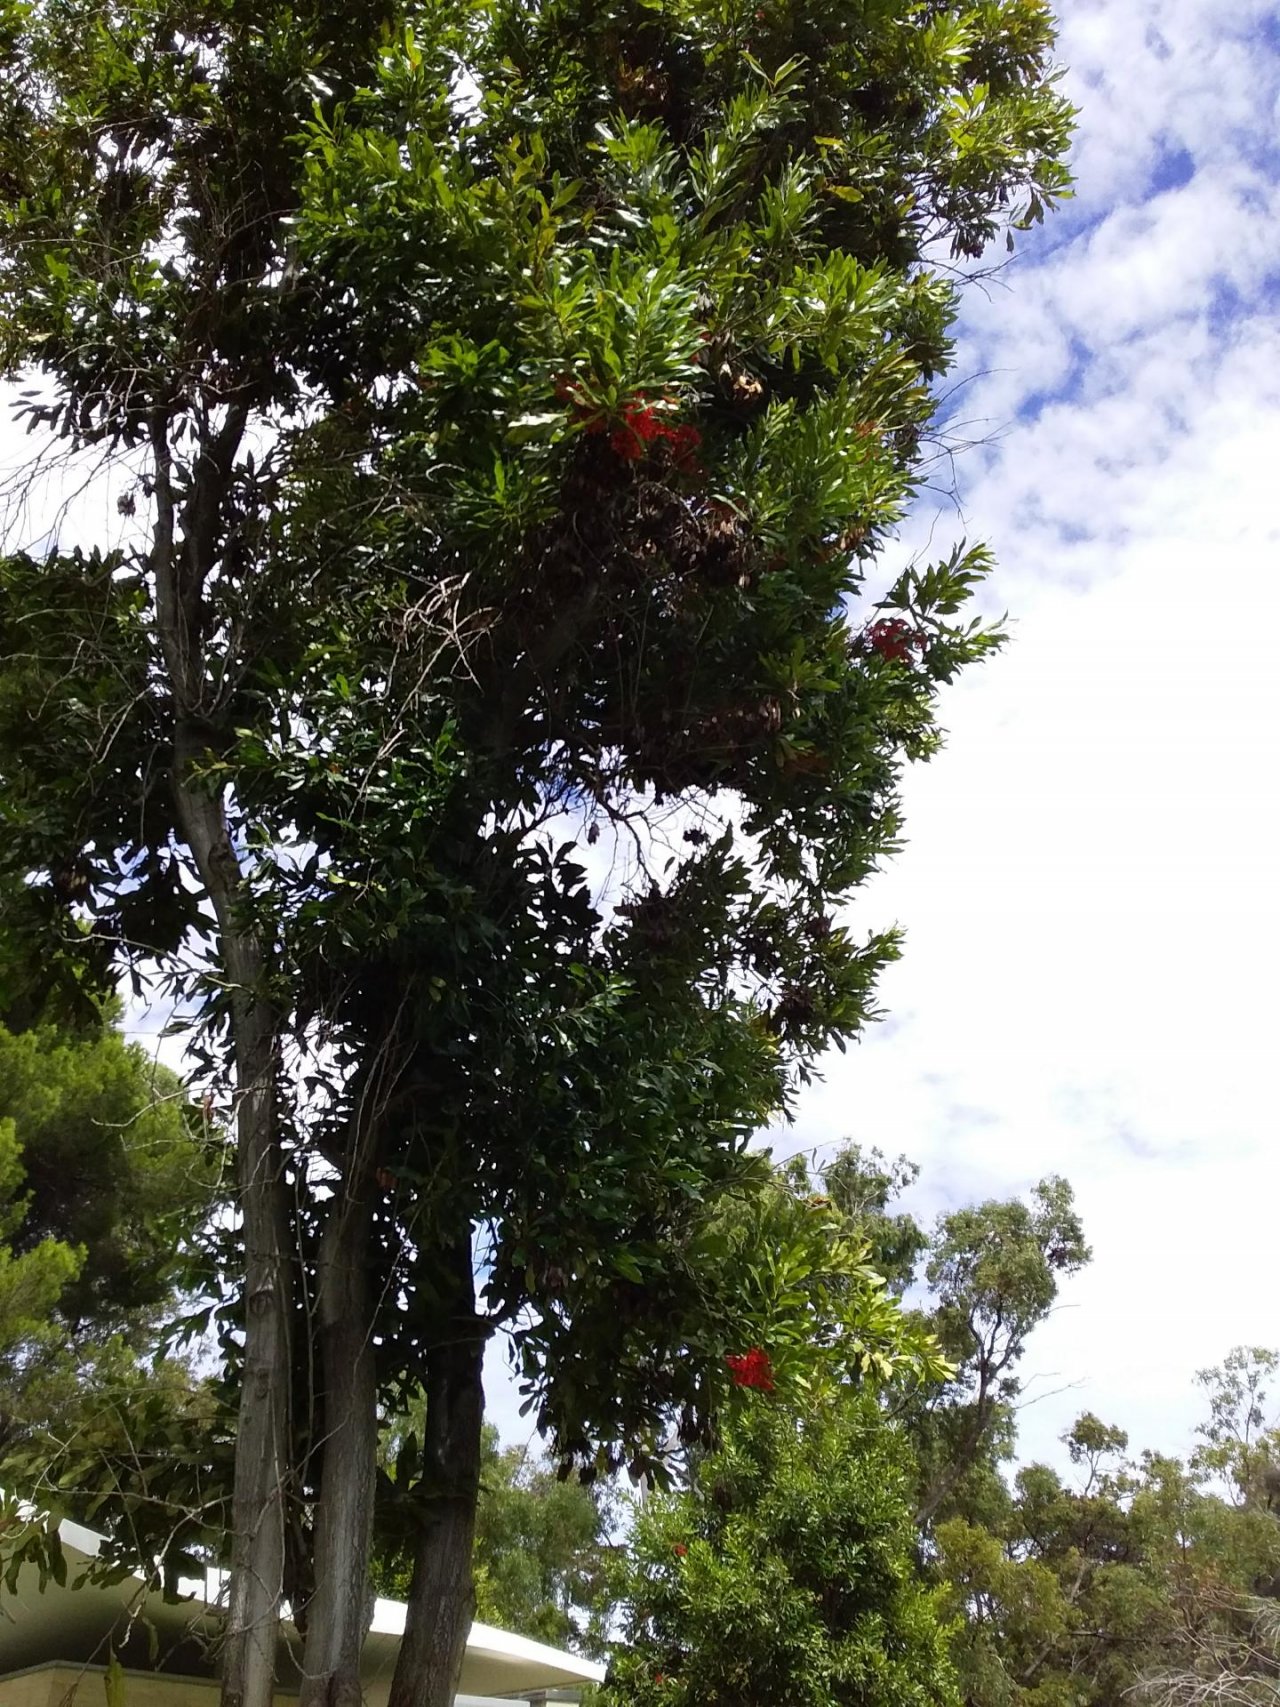 Firewheel Tree in ClimateWatch App spotted by Glenn Pegrum on 08.03.2021